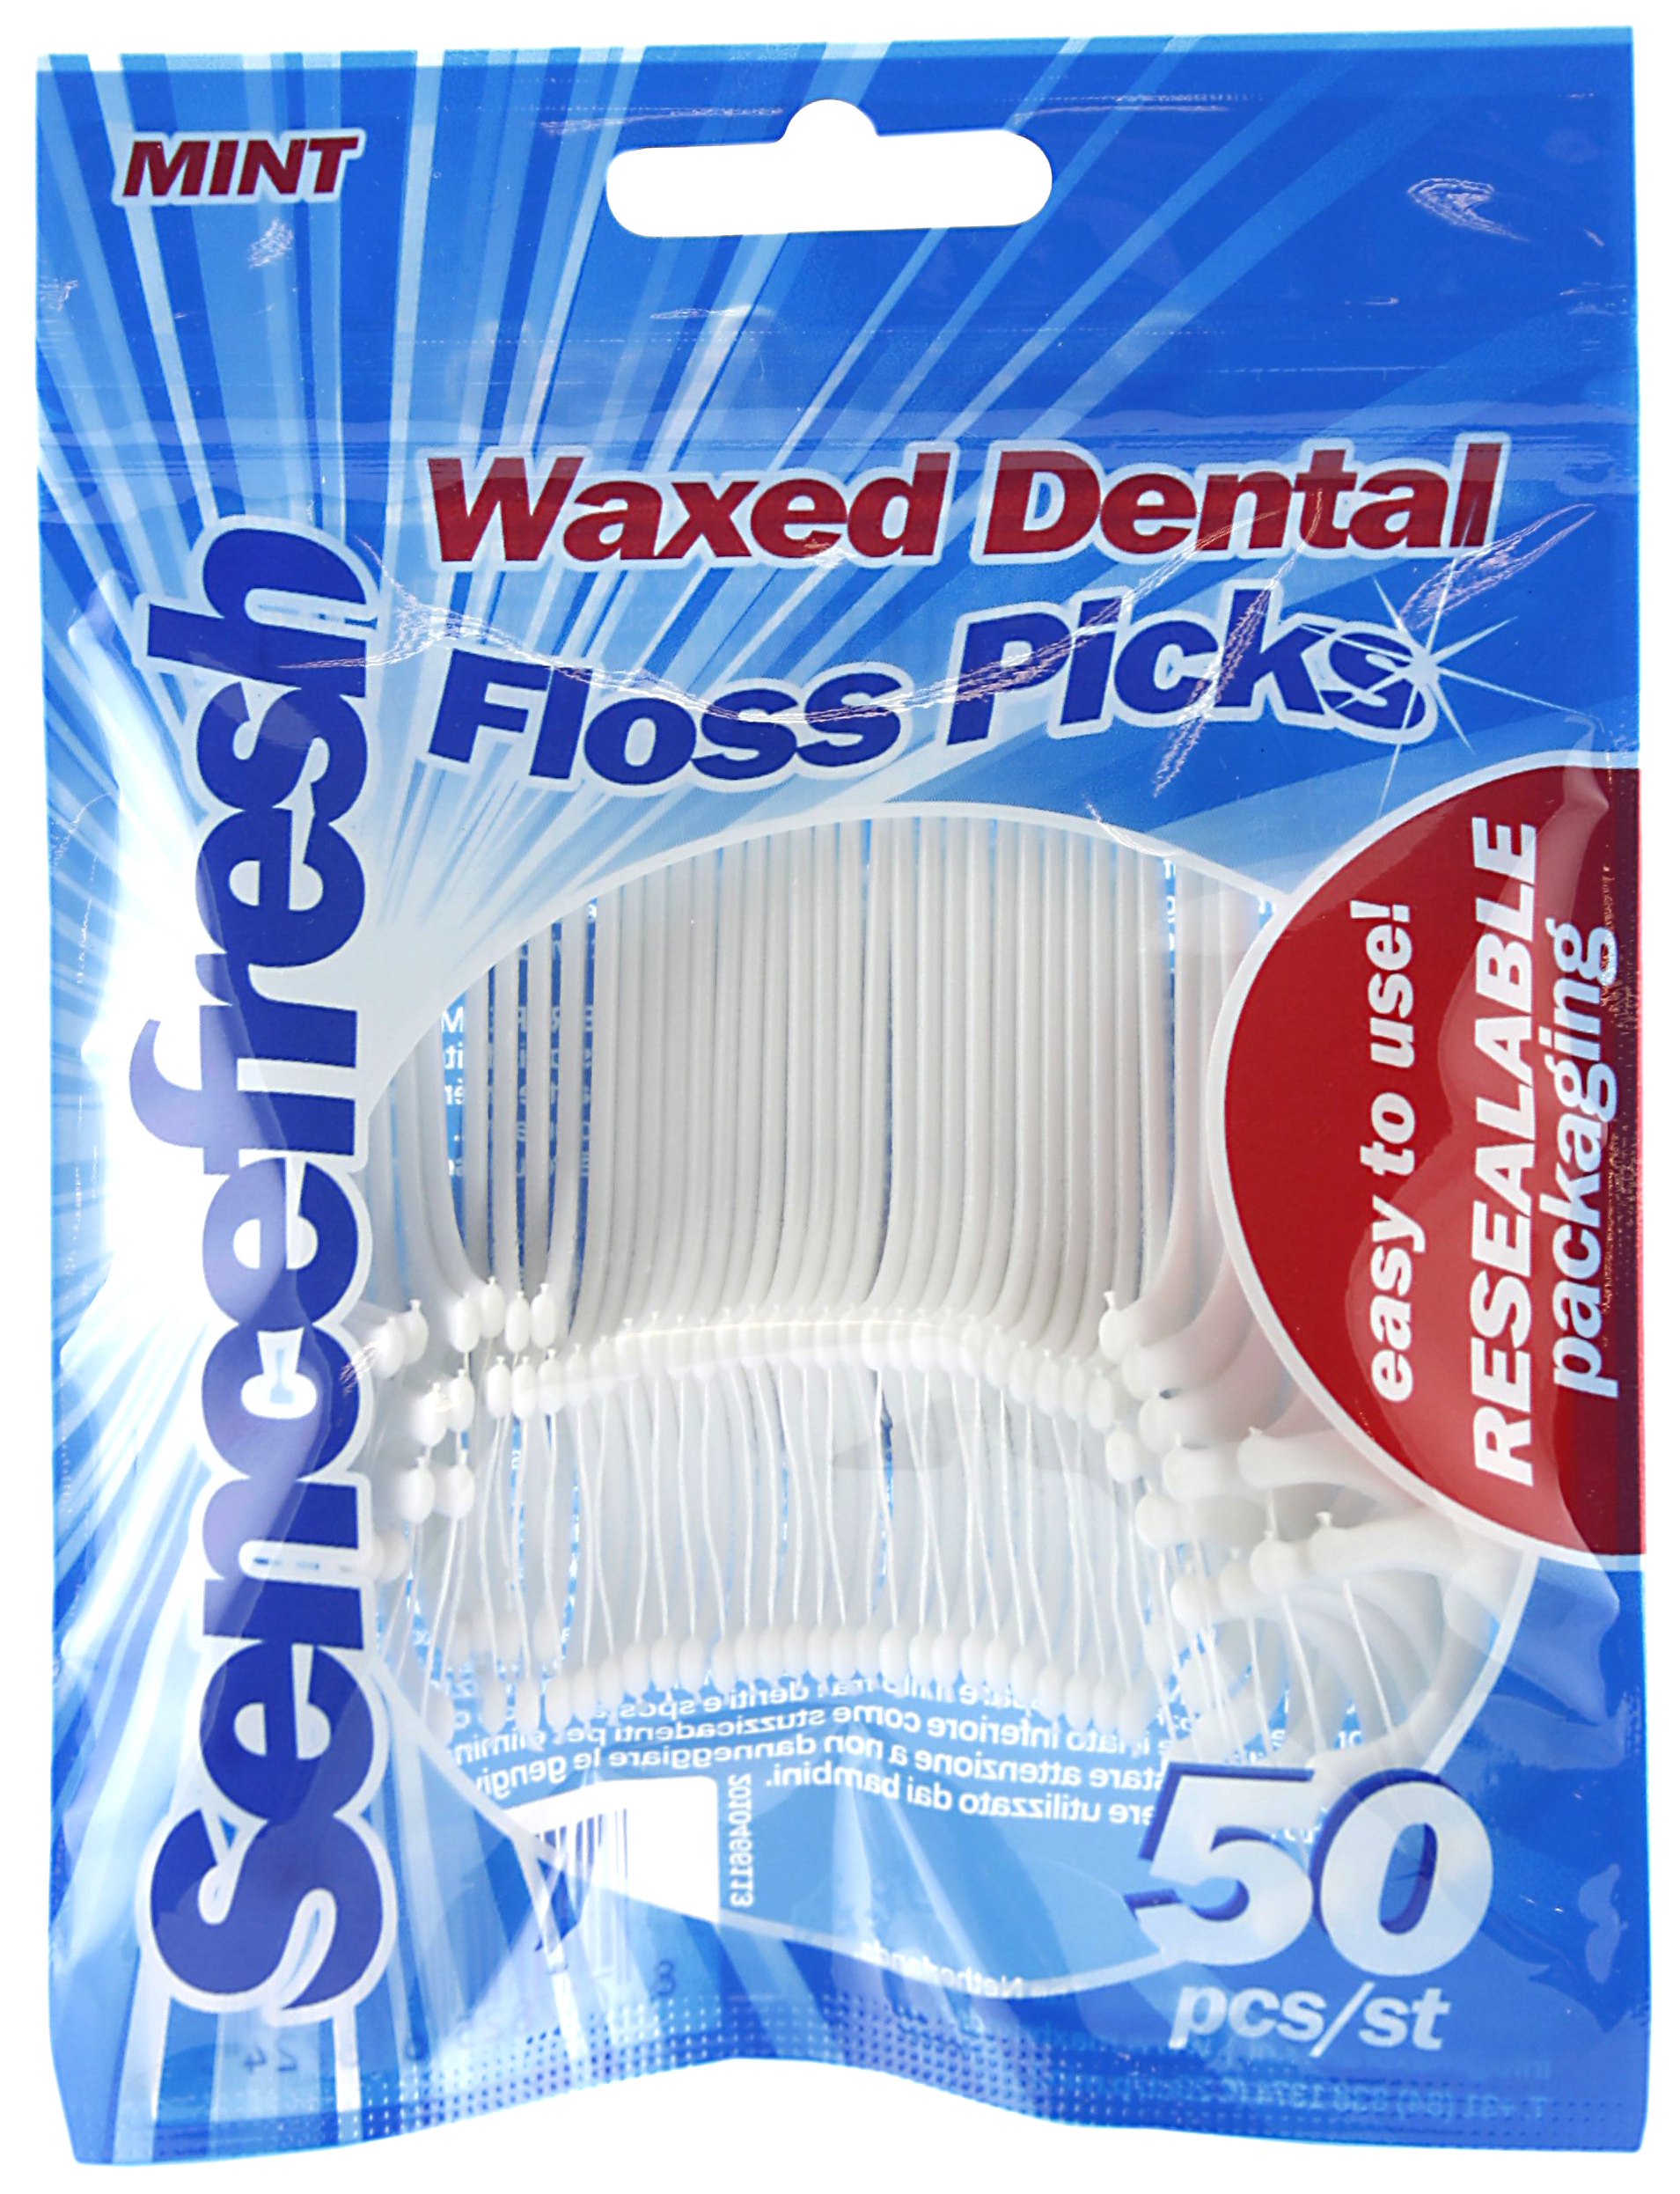 01719 - waxed dental floss sticks mint, 50 pcs